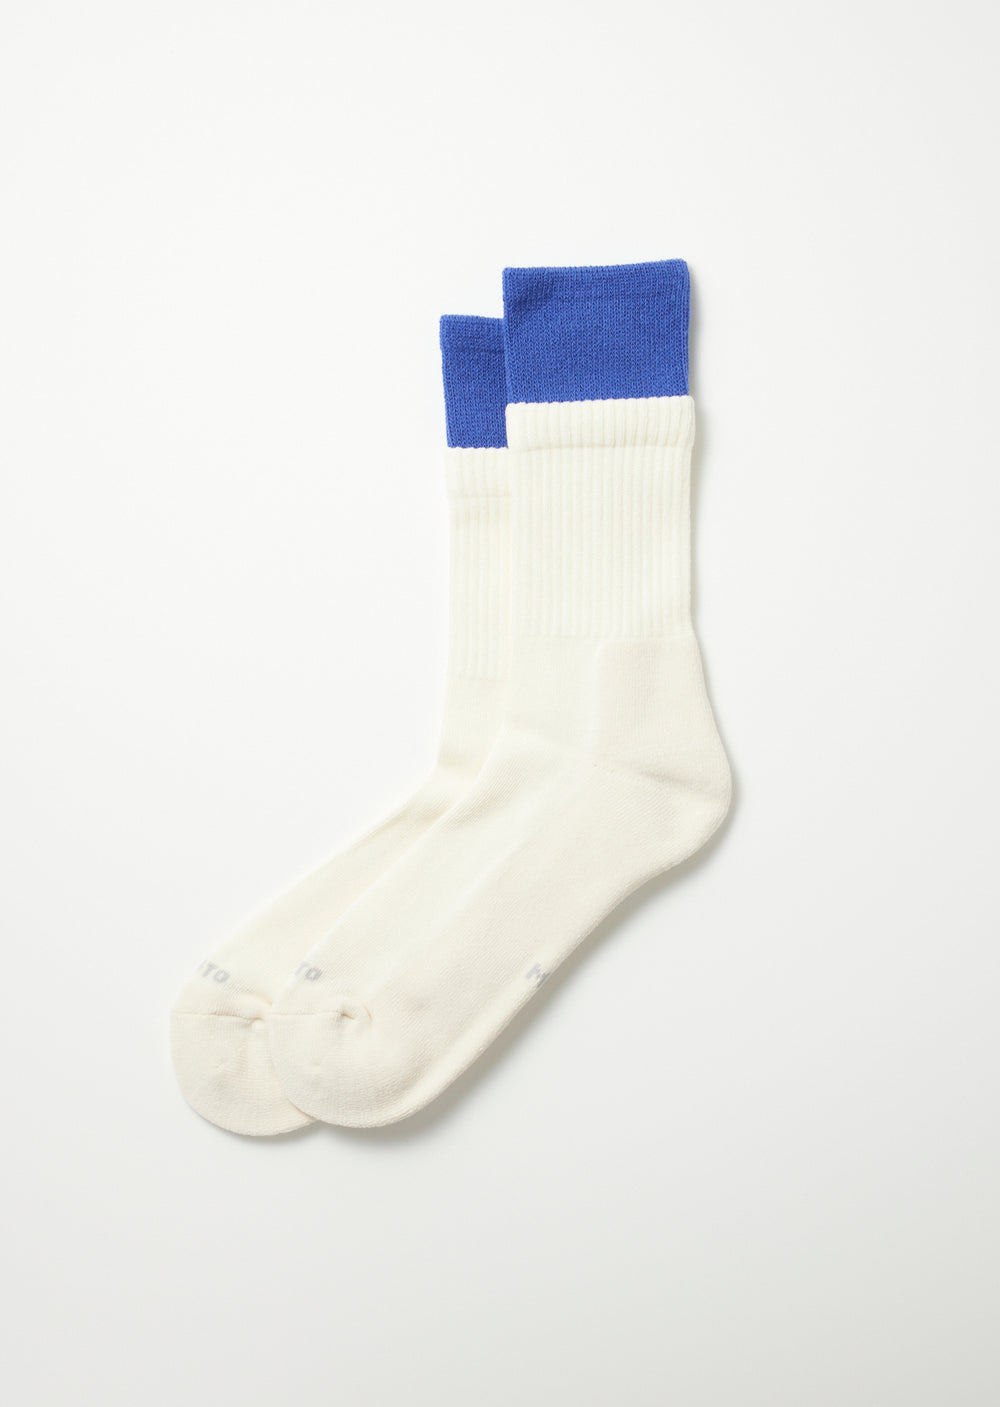 Double Layer Crew Socks - Slate Blue/Off White - R1494